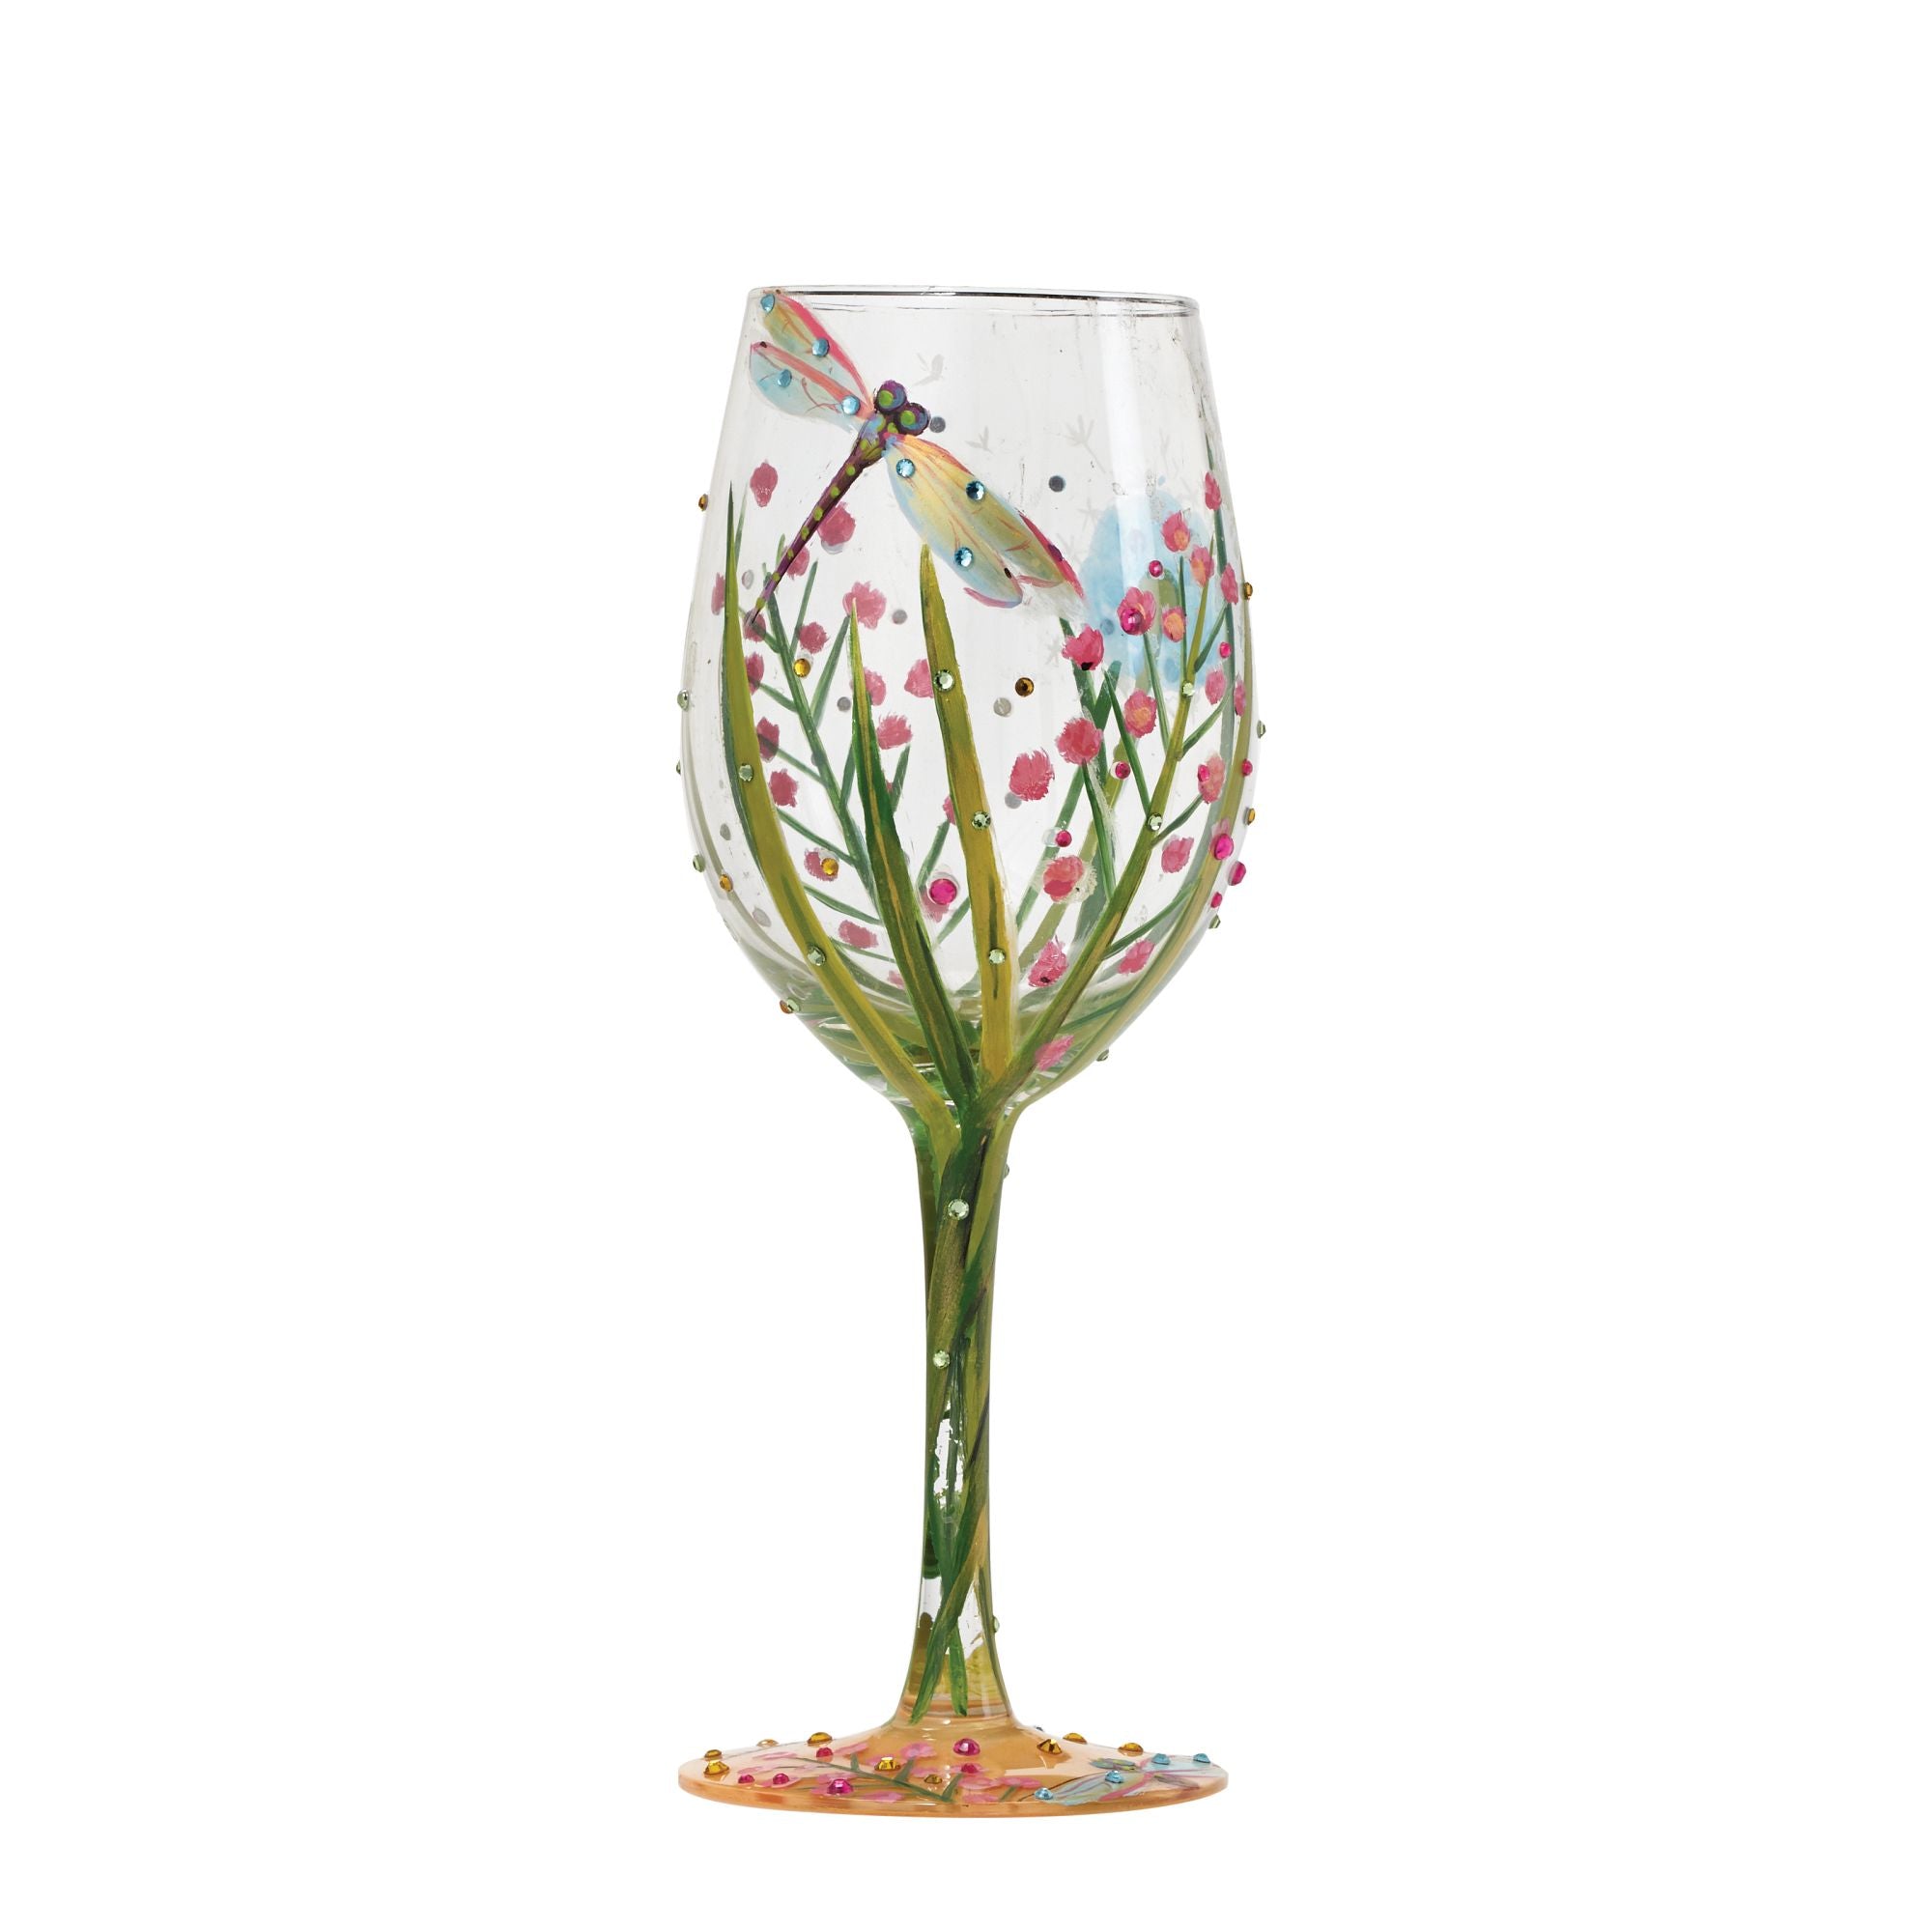 Dragon Glassware Stemless Wine Glasses, Iridescent Glass with